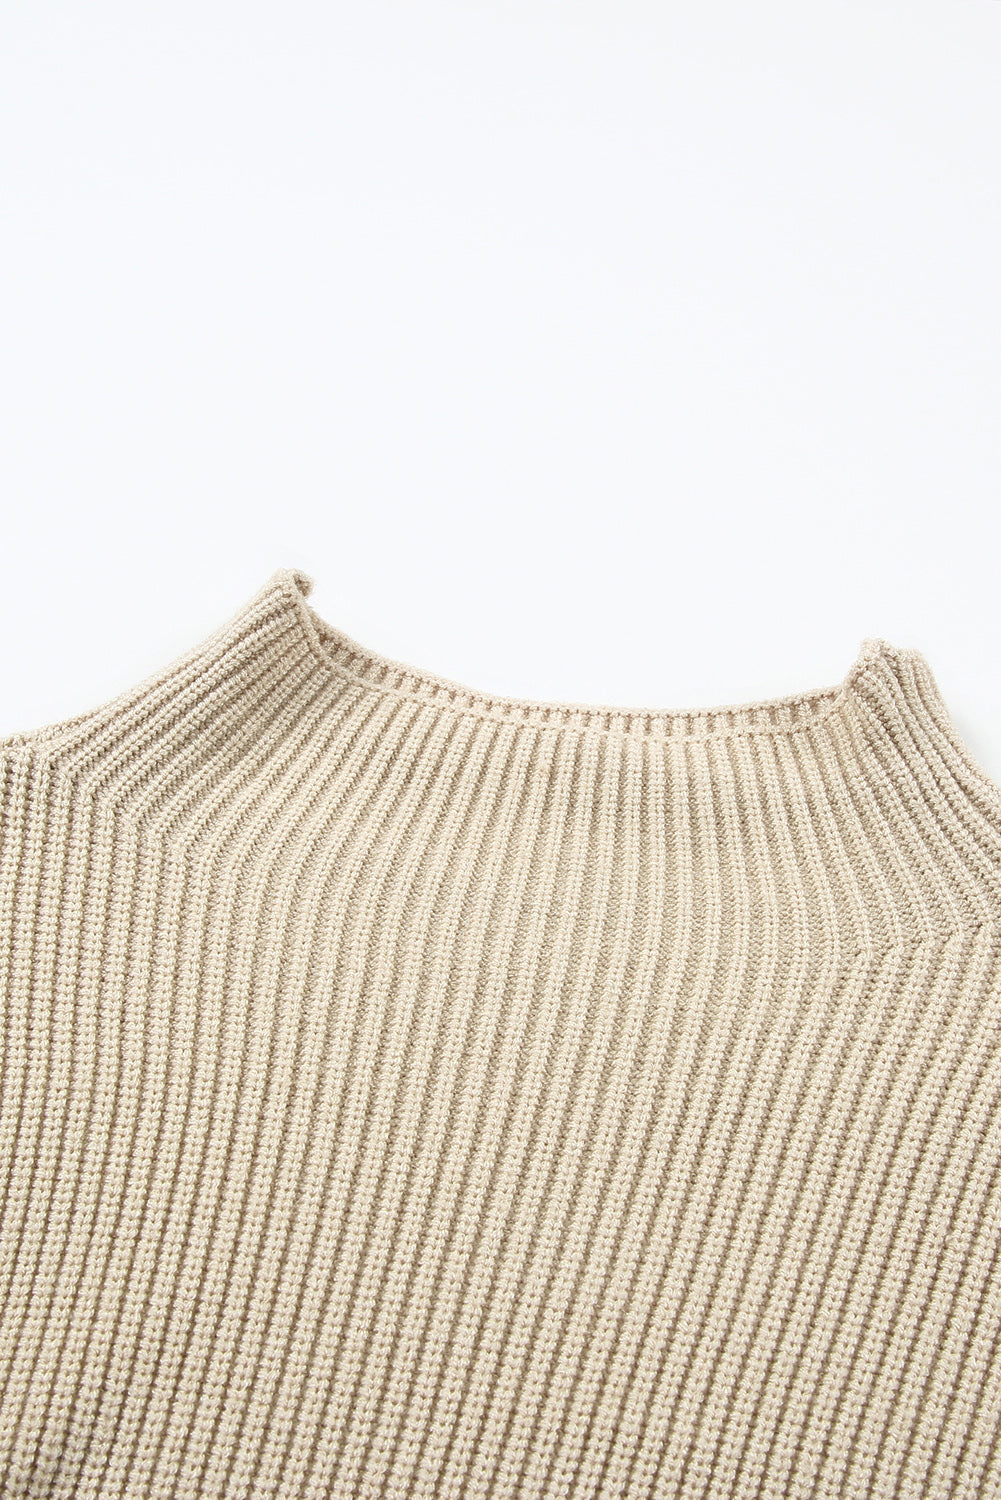 Khaki High Neck Drop Shoulder Rib Knit Sweater